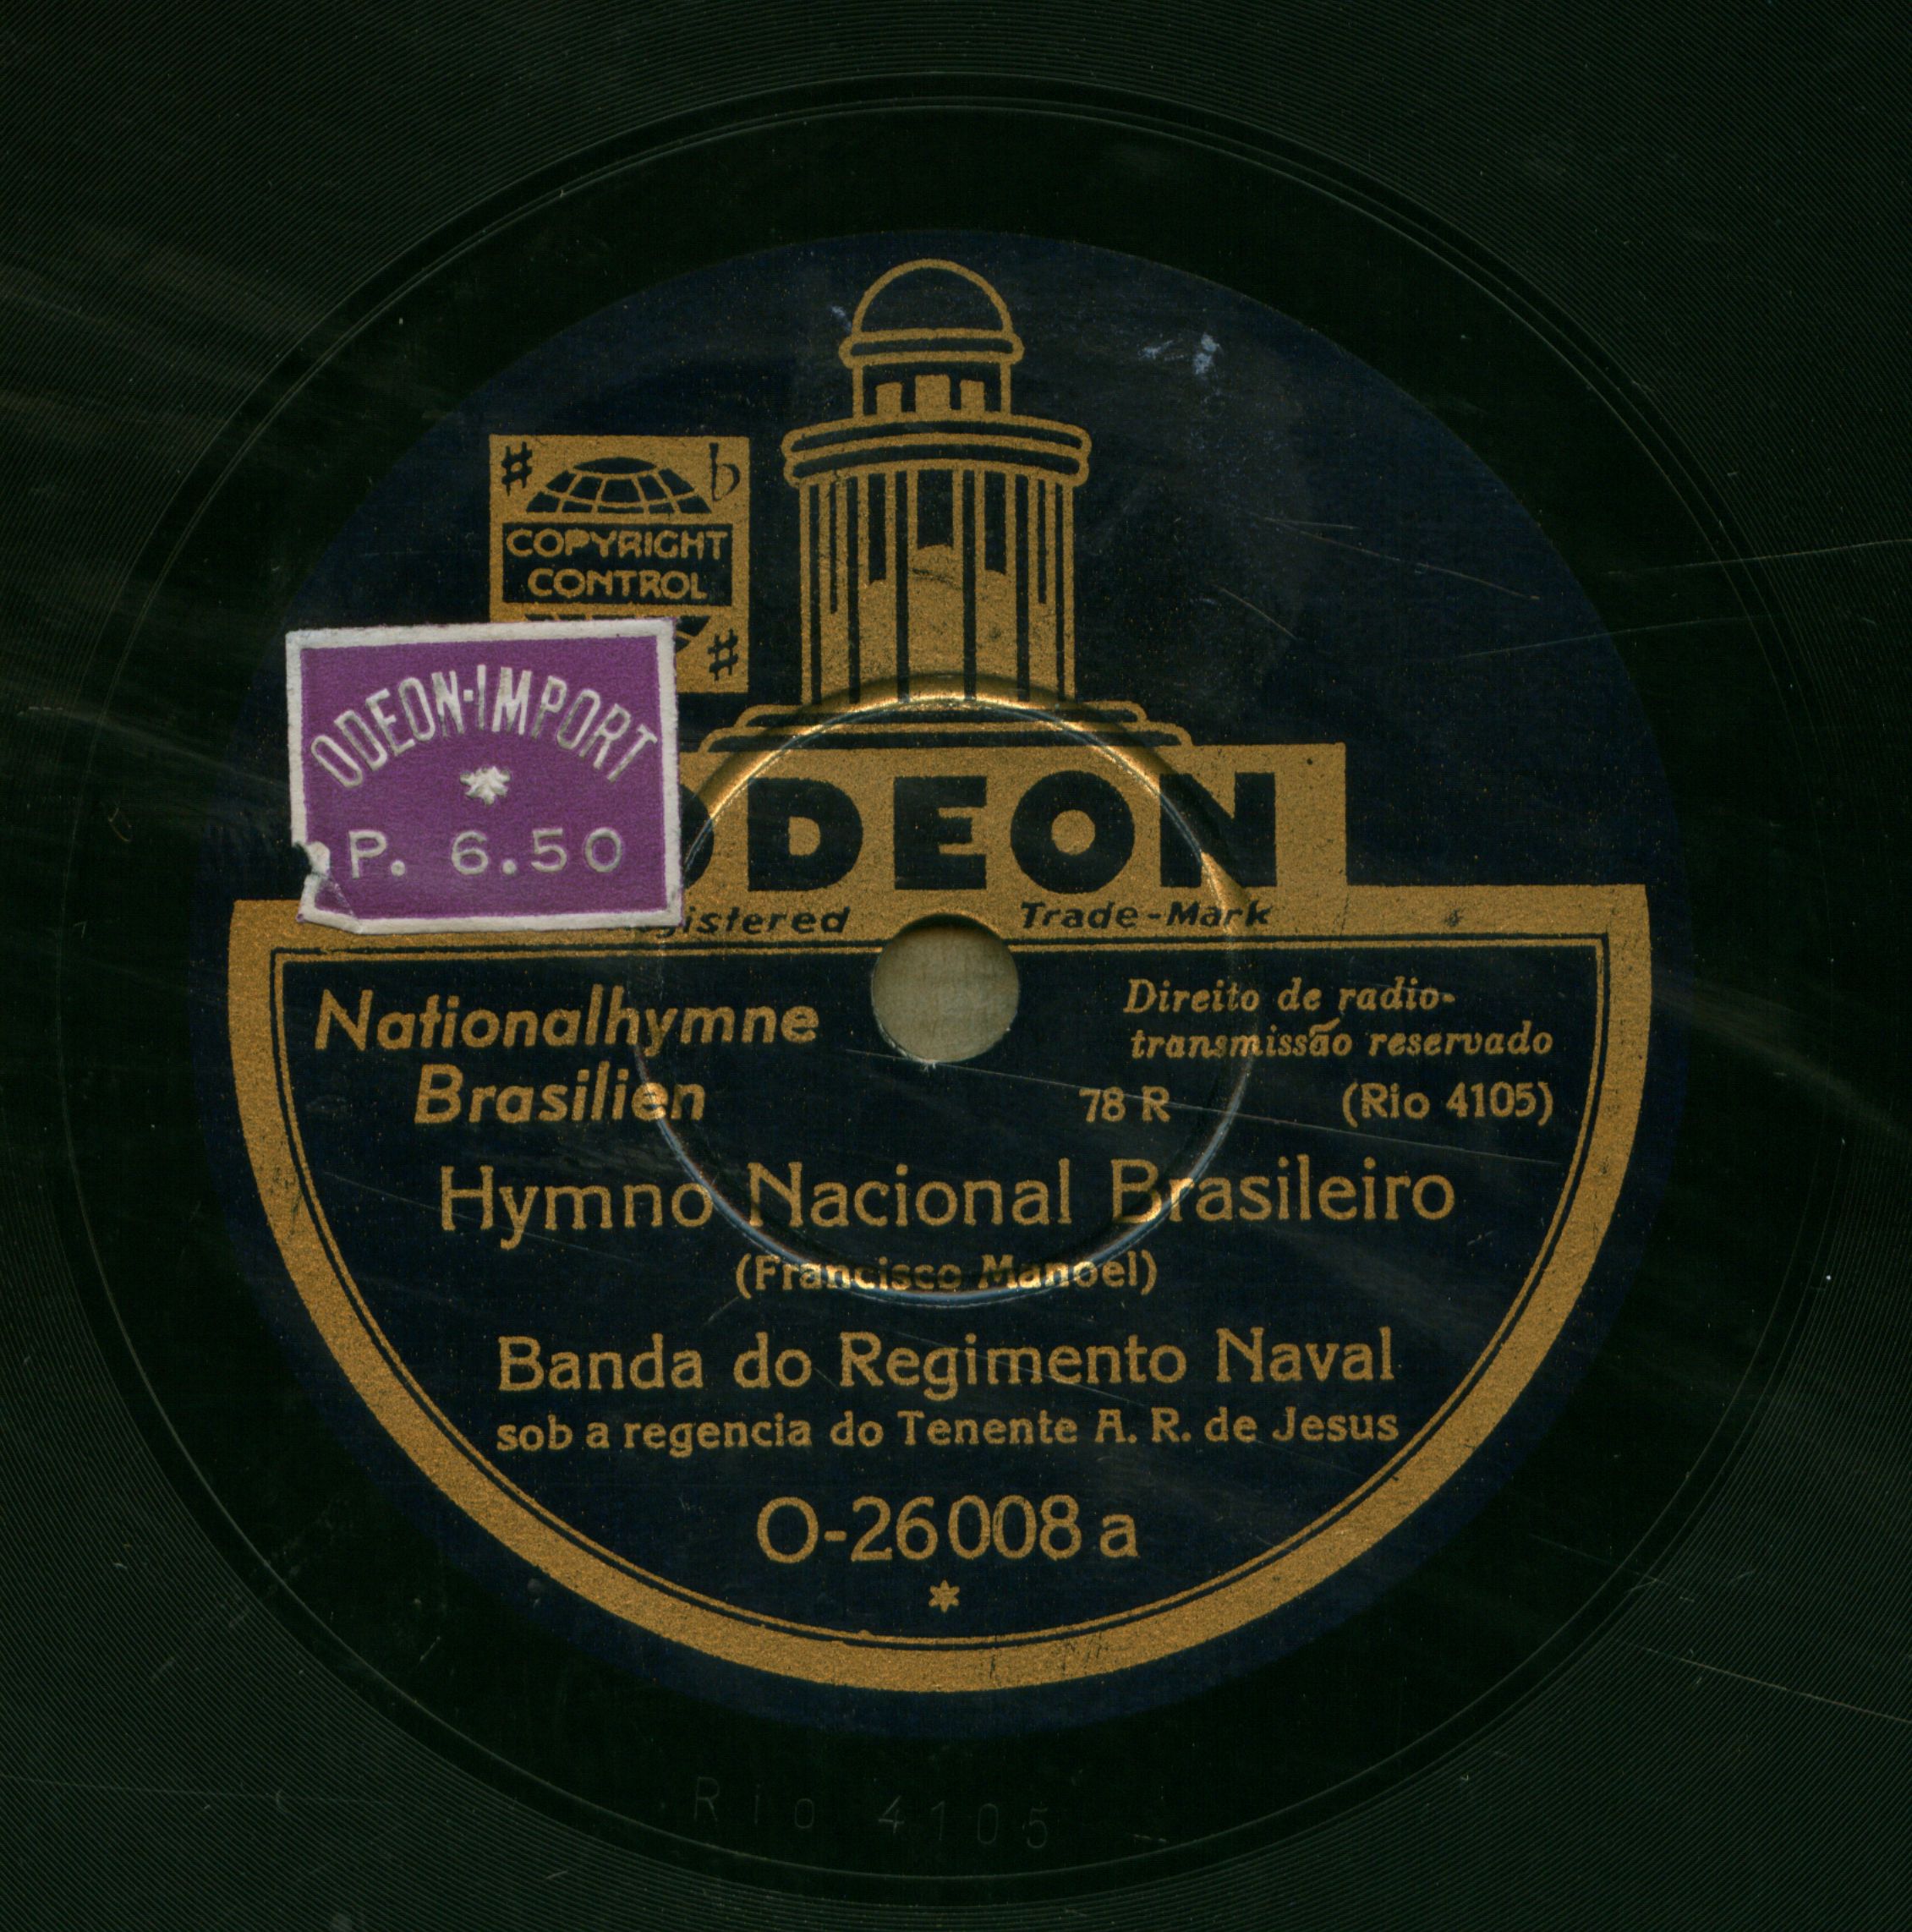 Hymno Nacional Brasileiro